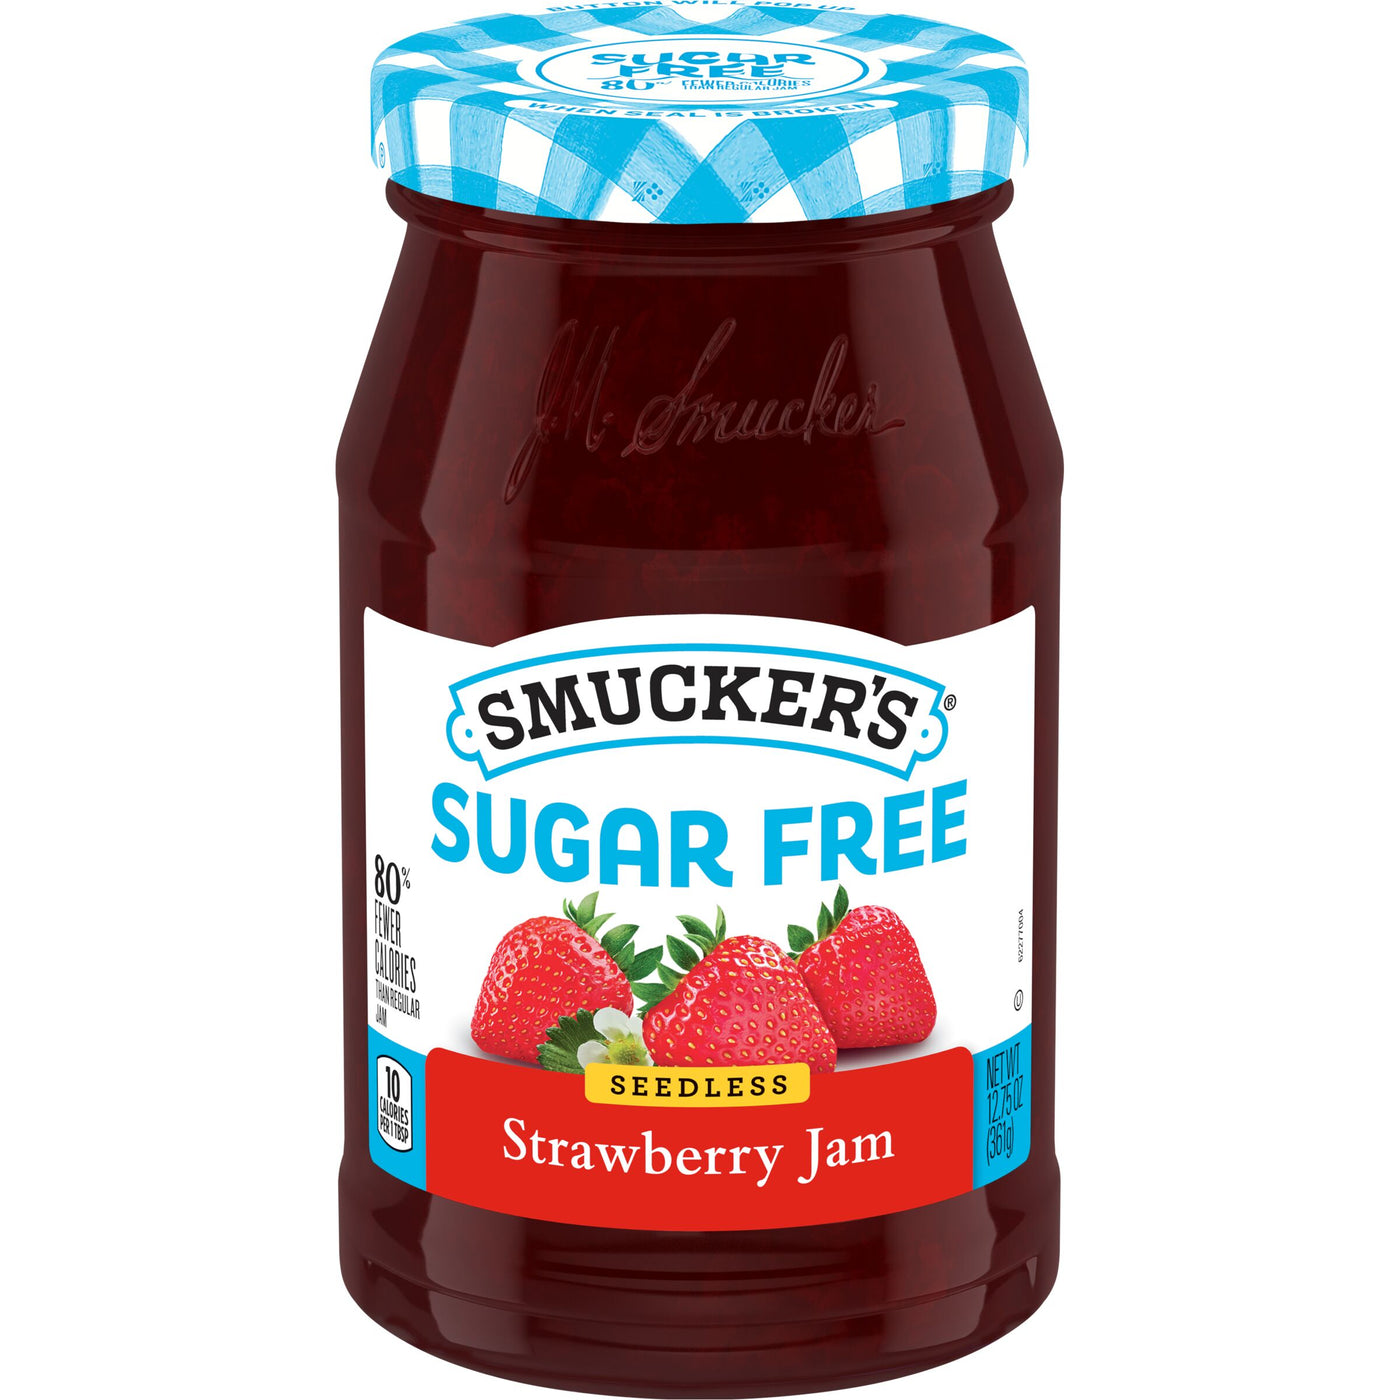 Smucker's Sugar Free Seedless Strawberry Jam with Splenda Brand Sweetener, 12.75 oz